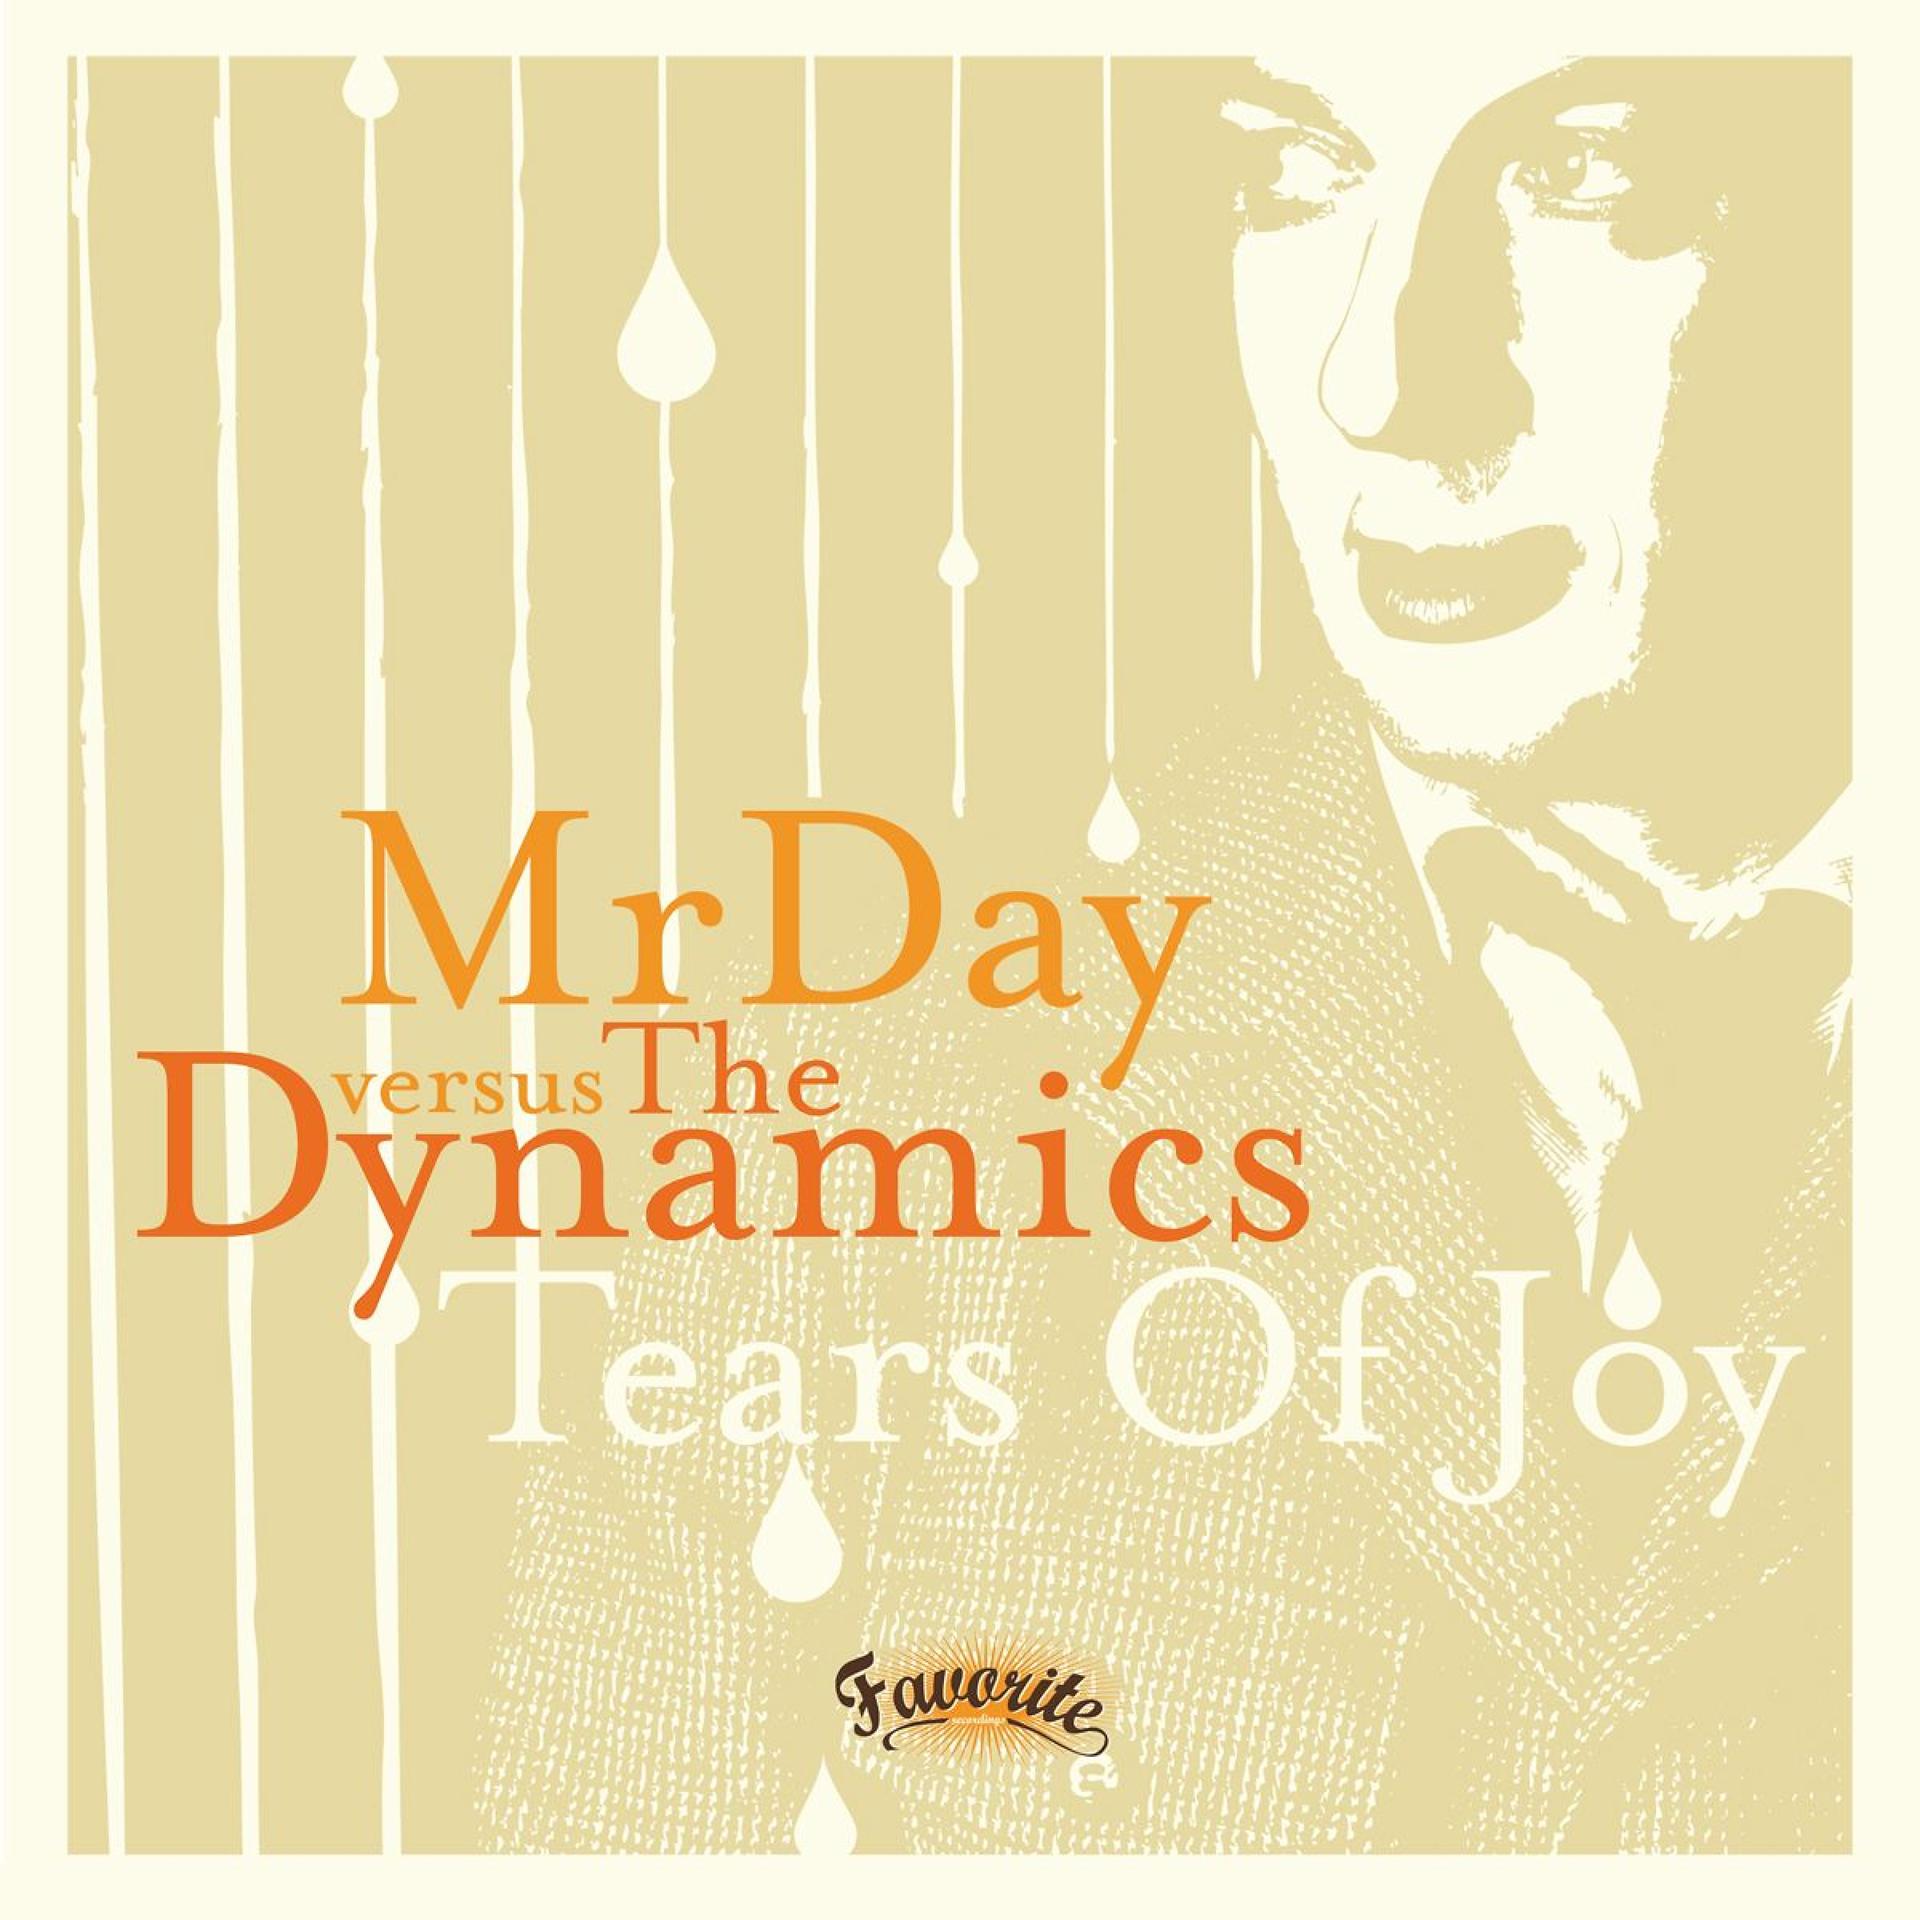 Постер альбома Tears of Joy